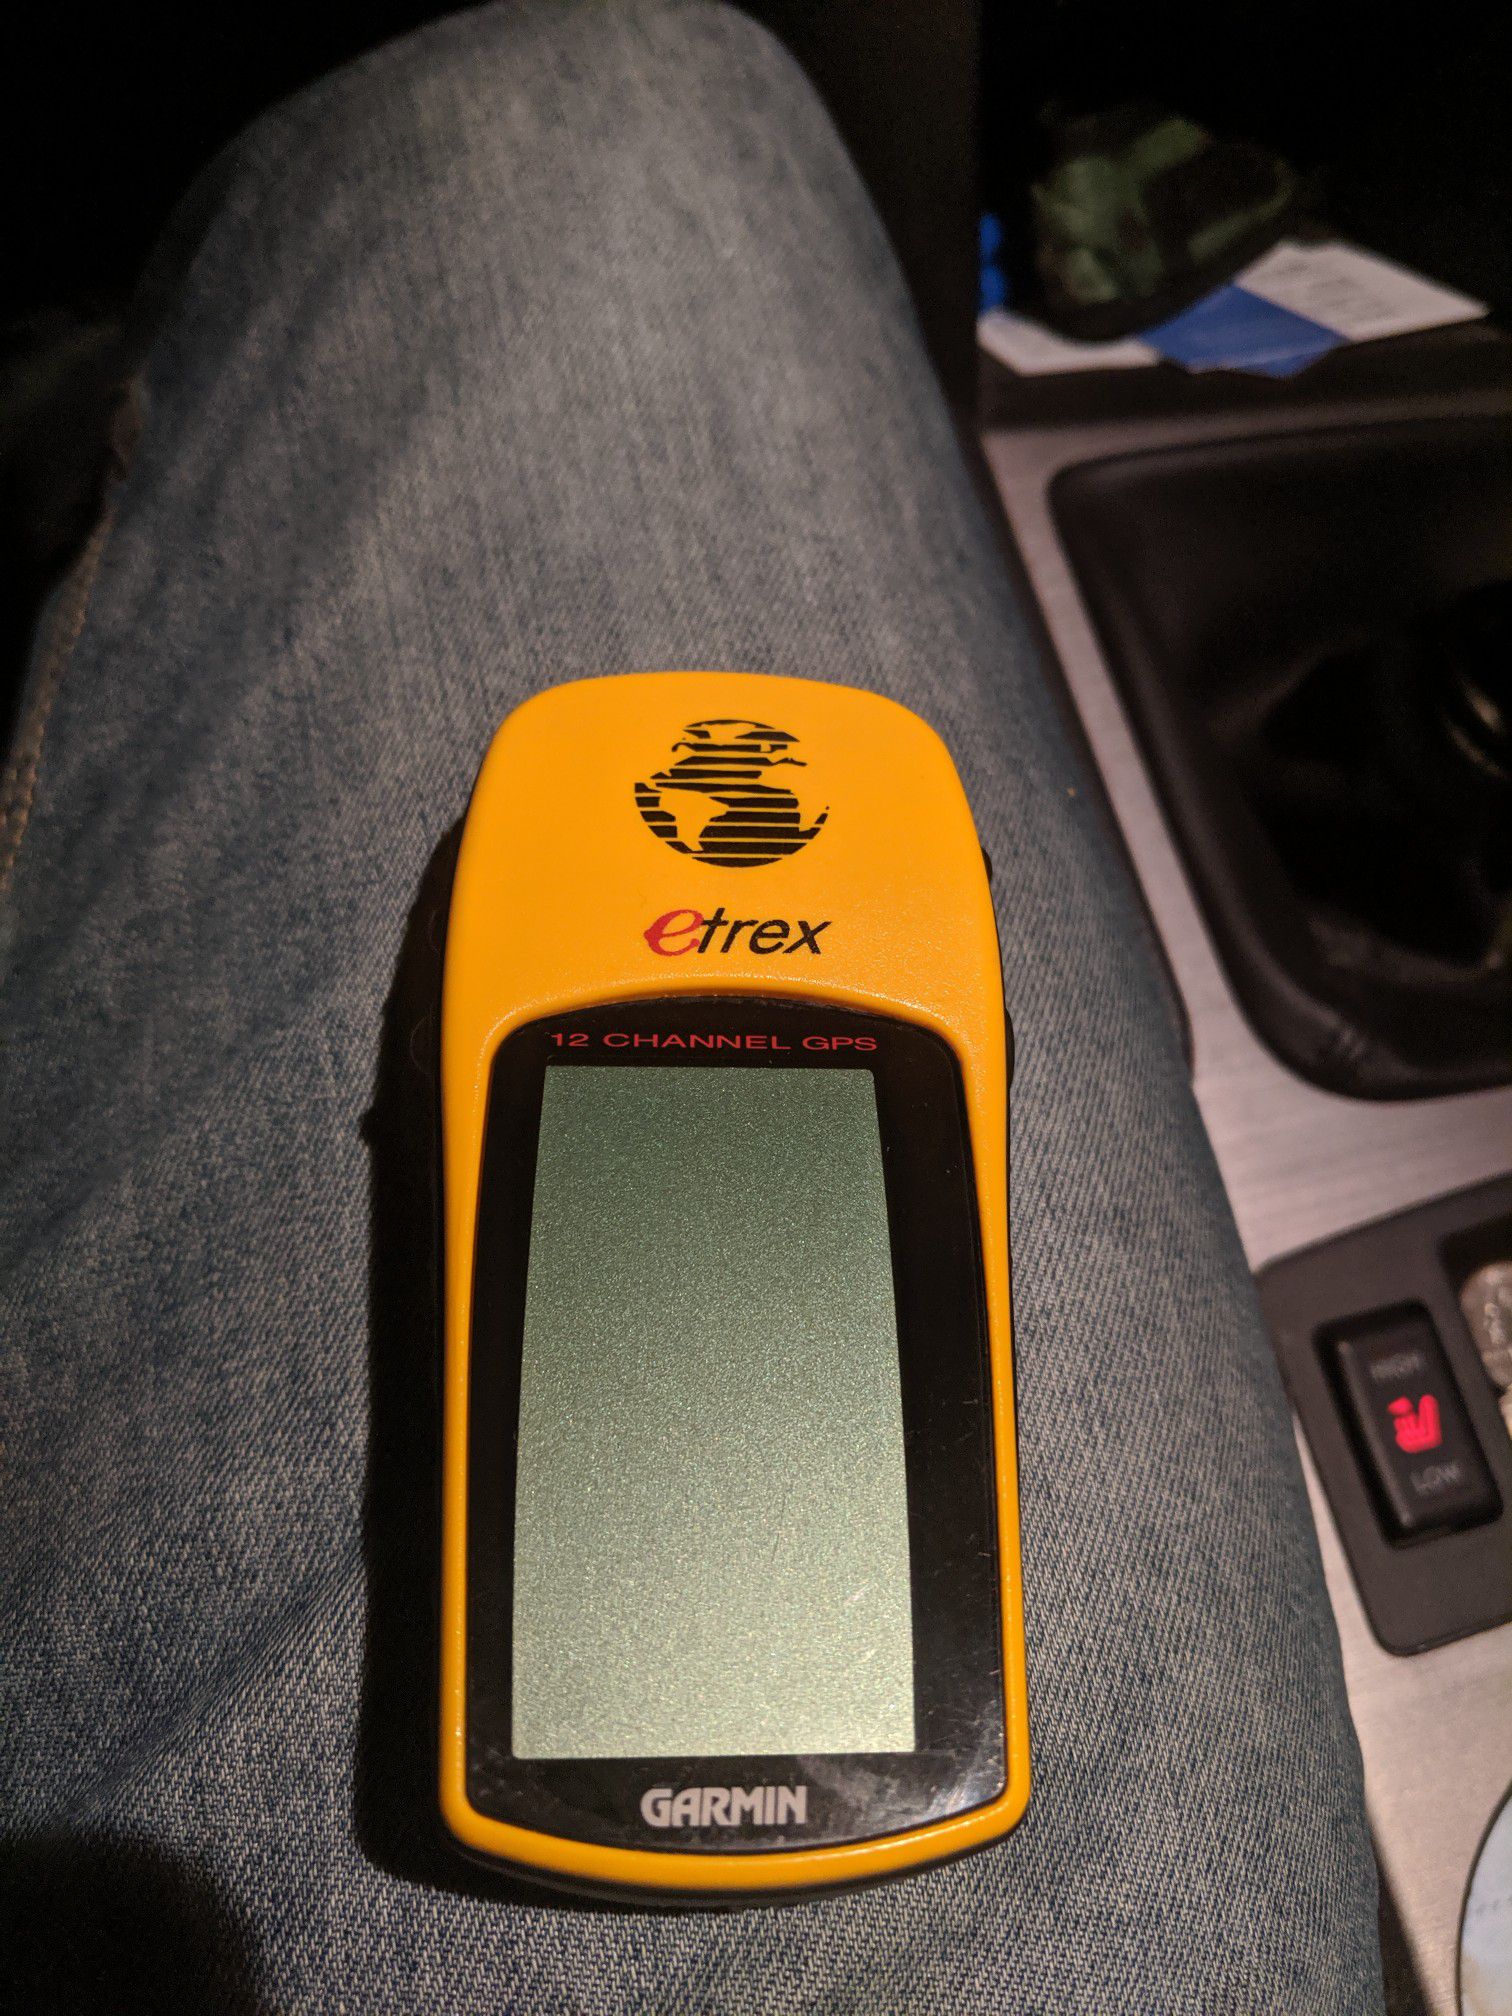 Garmin Etex 12 channel GPS - only 3 ounces weight!